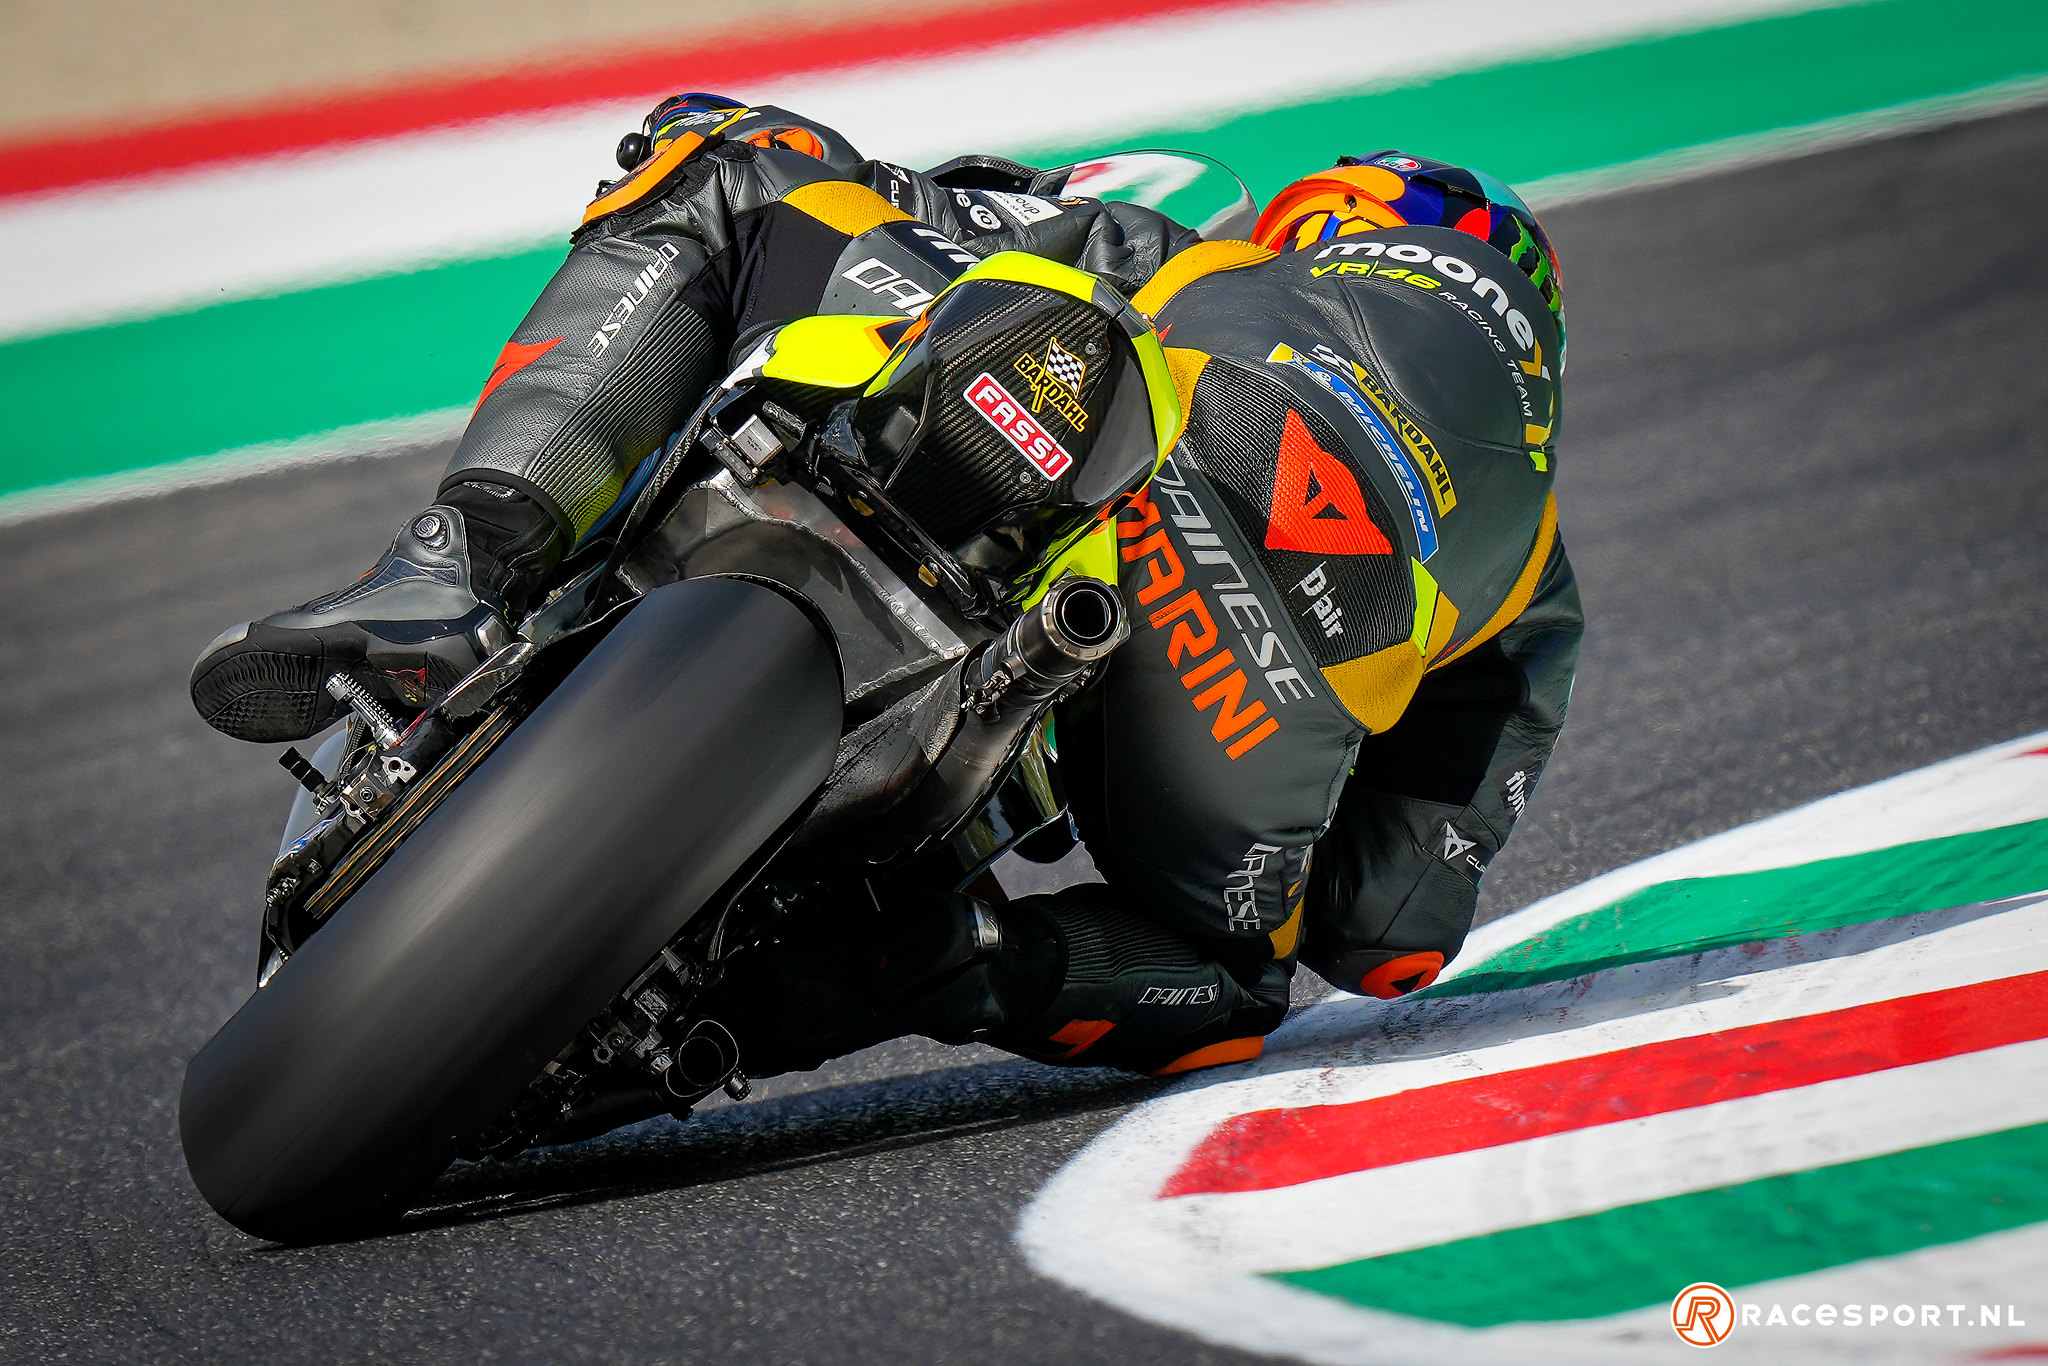 #72 Marco Bezzecchi - (ITA) - Mooney VR46 Racing Team - Ducati Desmosedici GP21